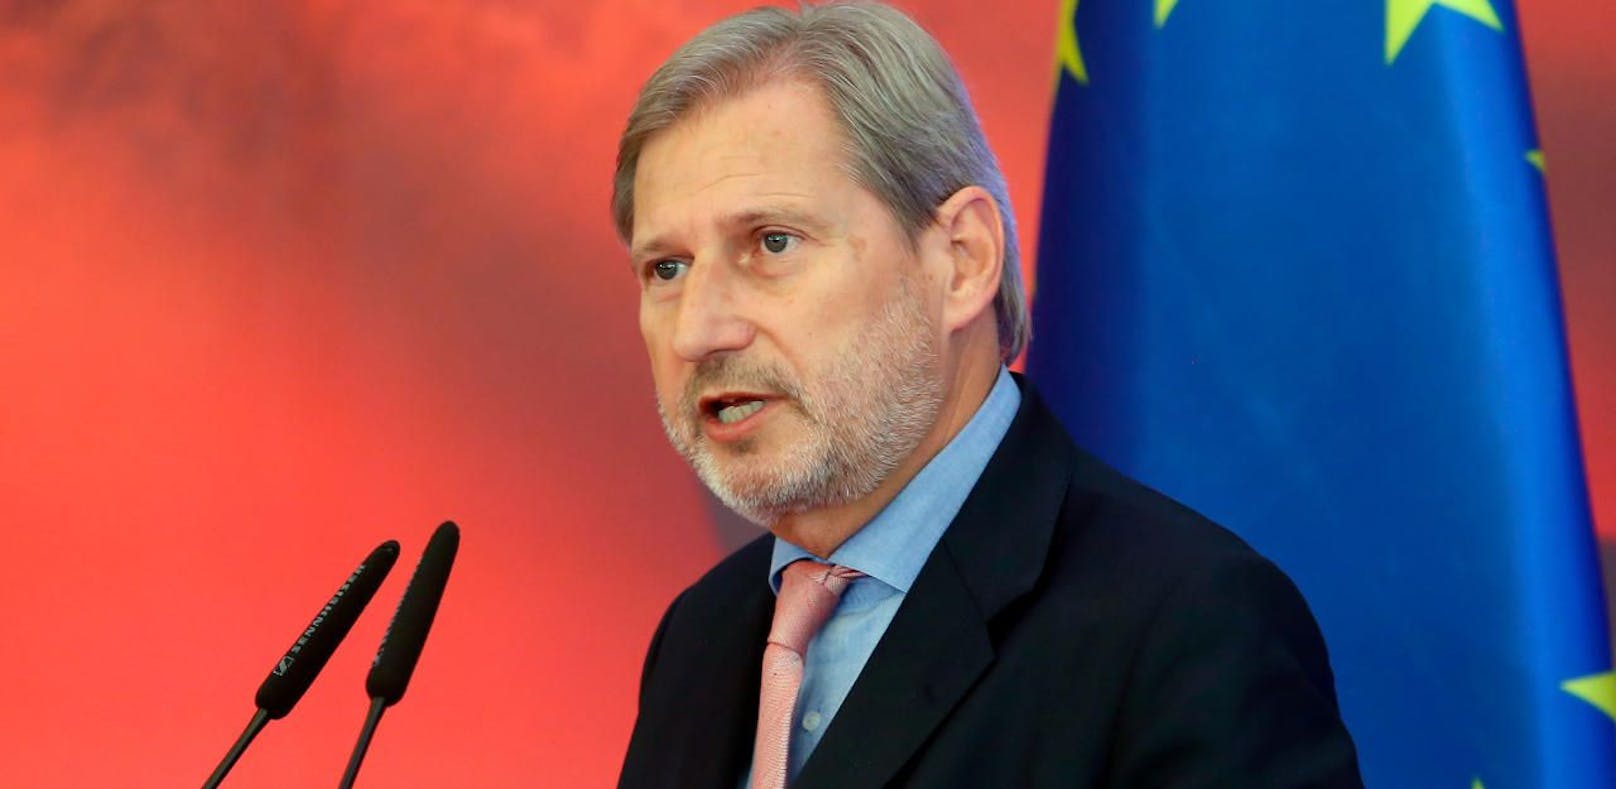 Johannes Hahn als EU-Kommissar nominiert